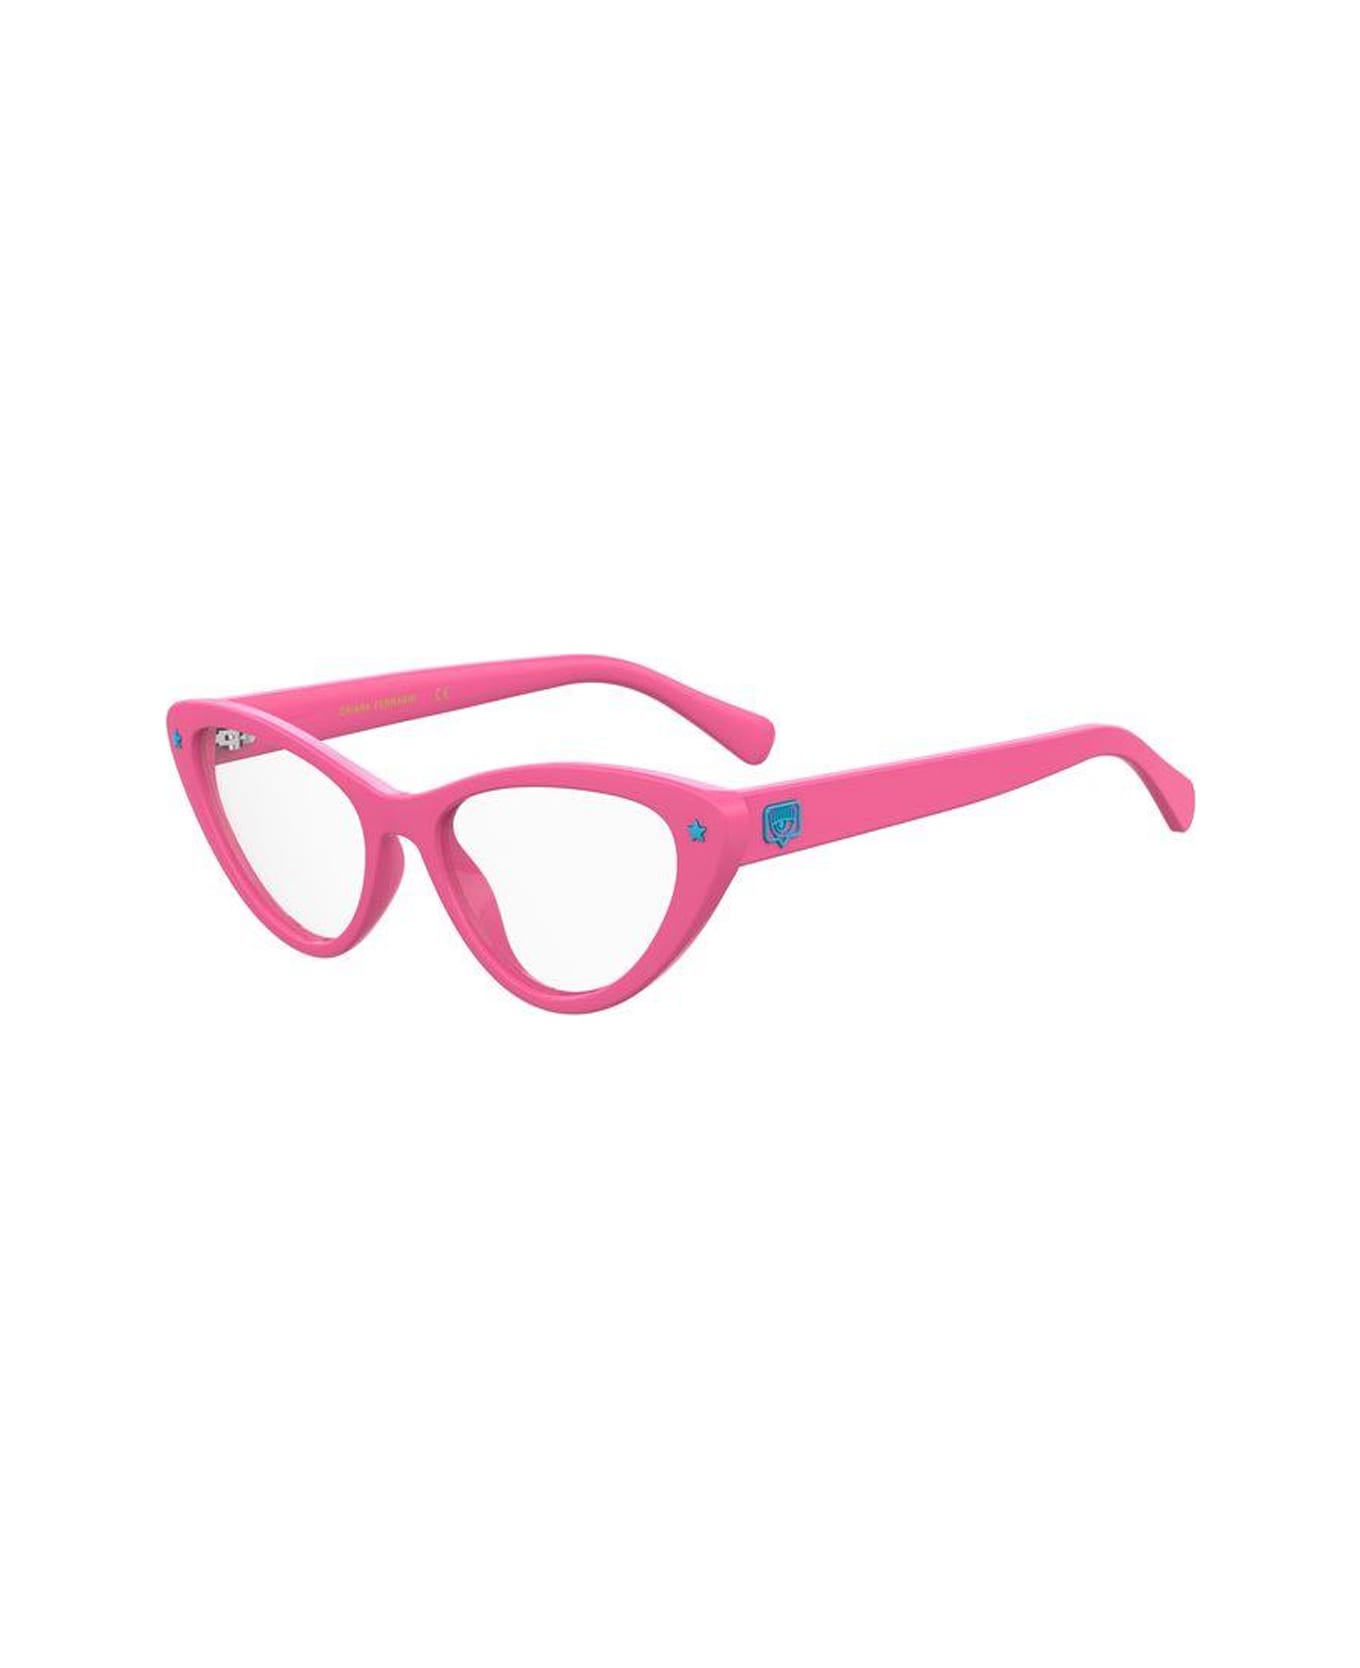 Chiara Ferragni Cf 7012 Pink Glasses - Rosa